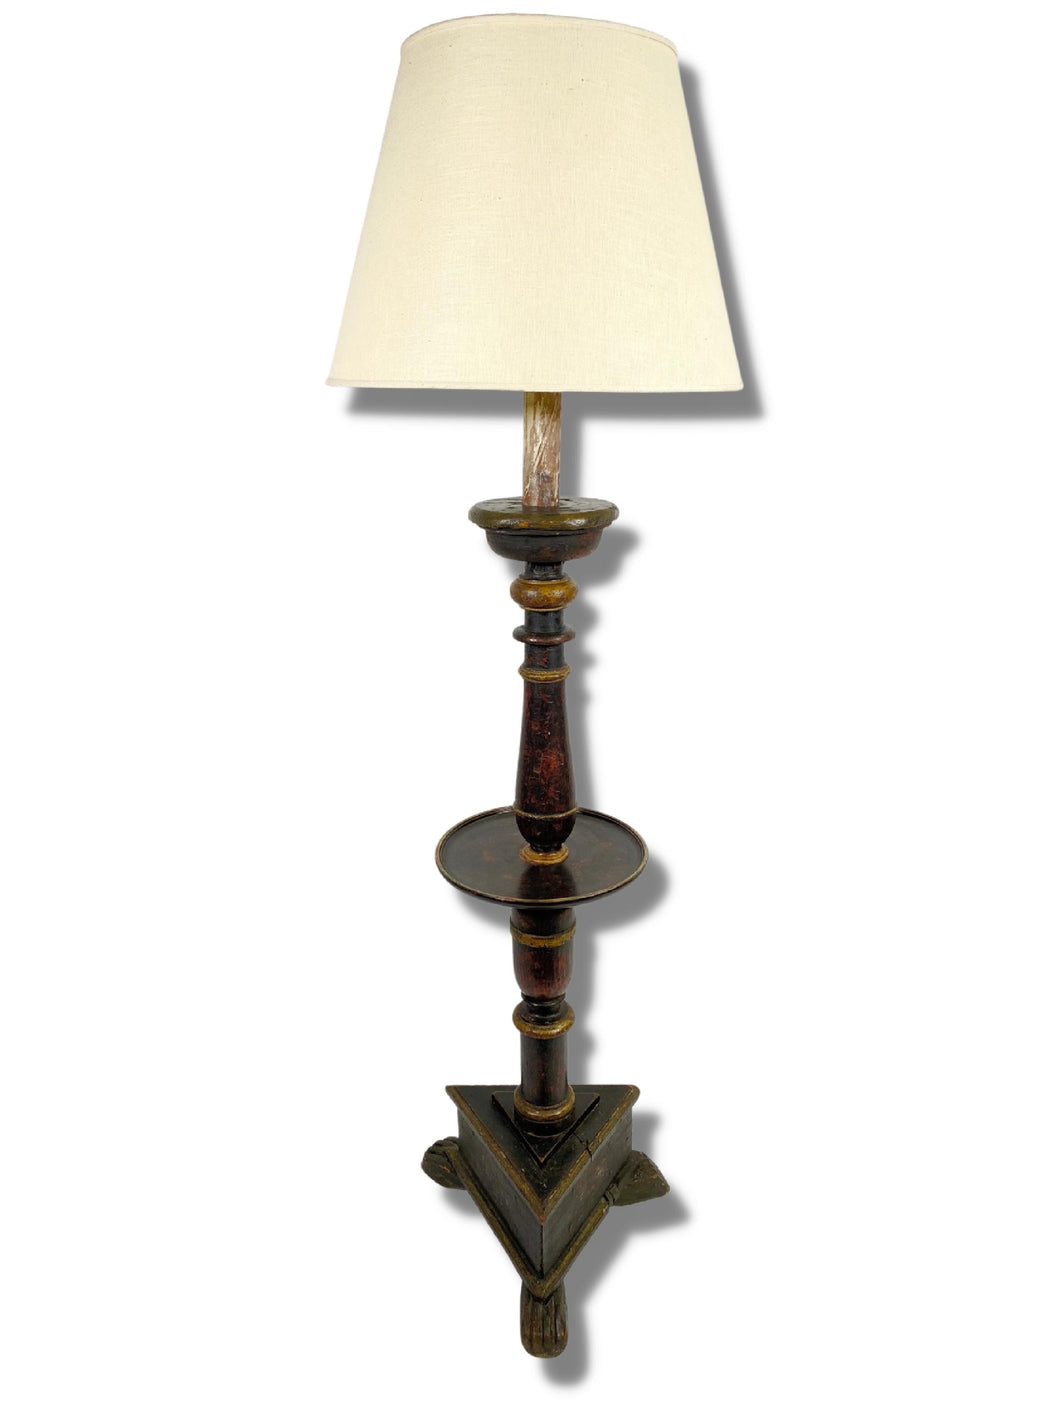 Painted Pedestal Lamp Table